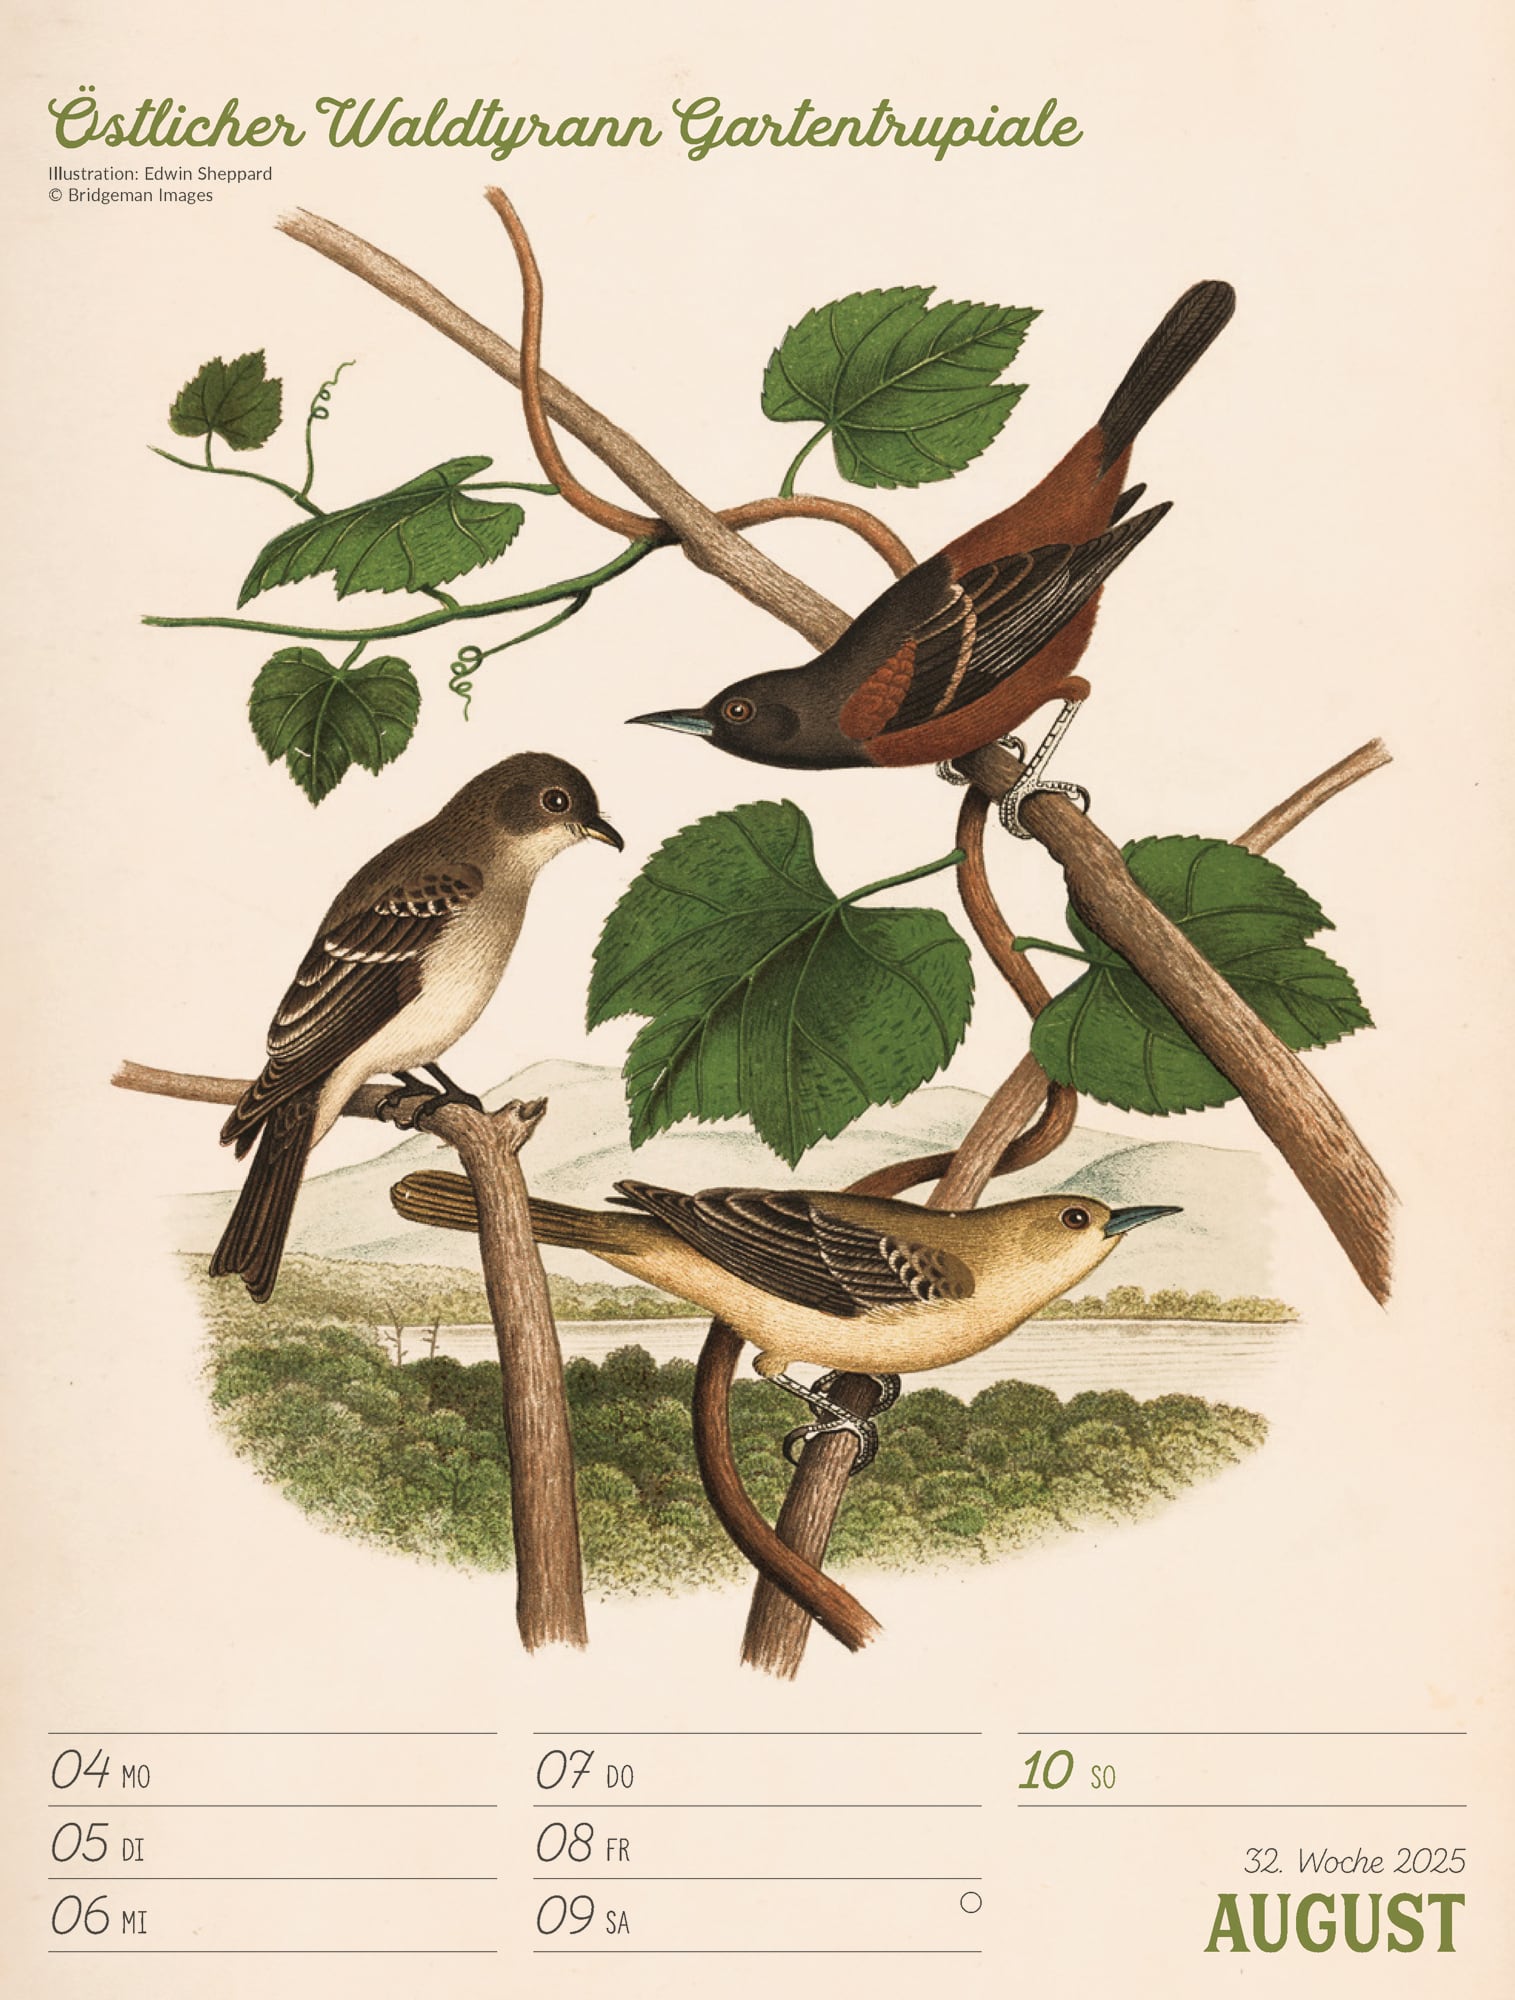 Ackermann Calendar The wonderful World of Birds 2025 - Weekly Planner - Inside View 35